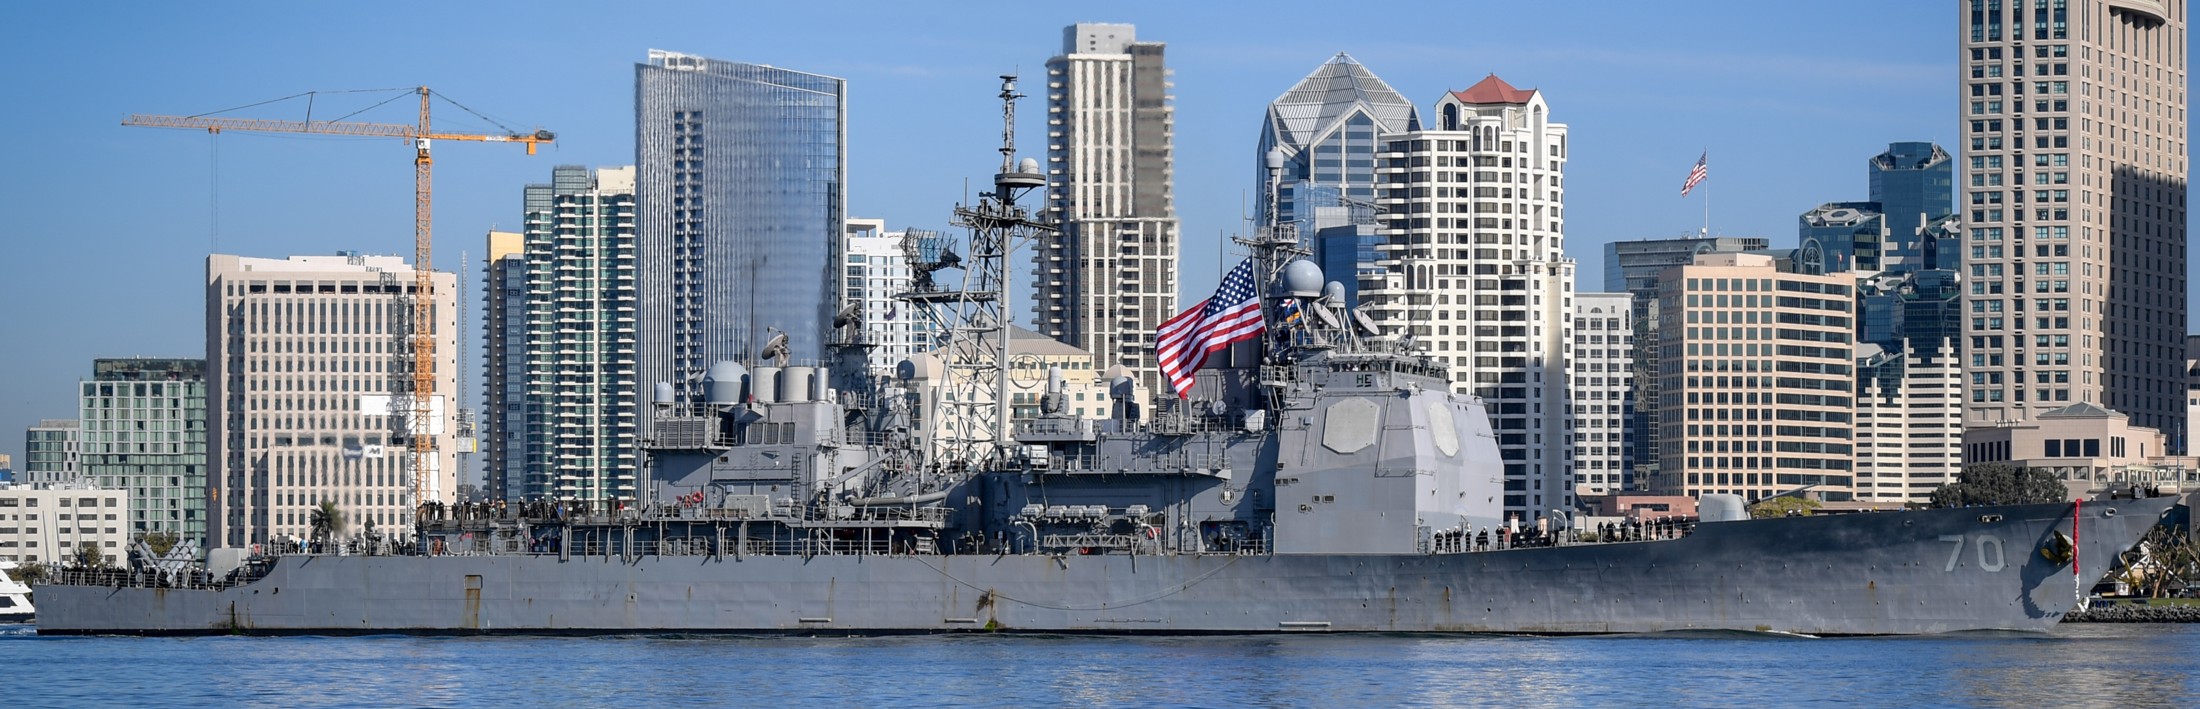 cg-70 uss lake erie ticonderoga class guided missile cruiser us navy returning san diego california 128